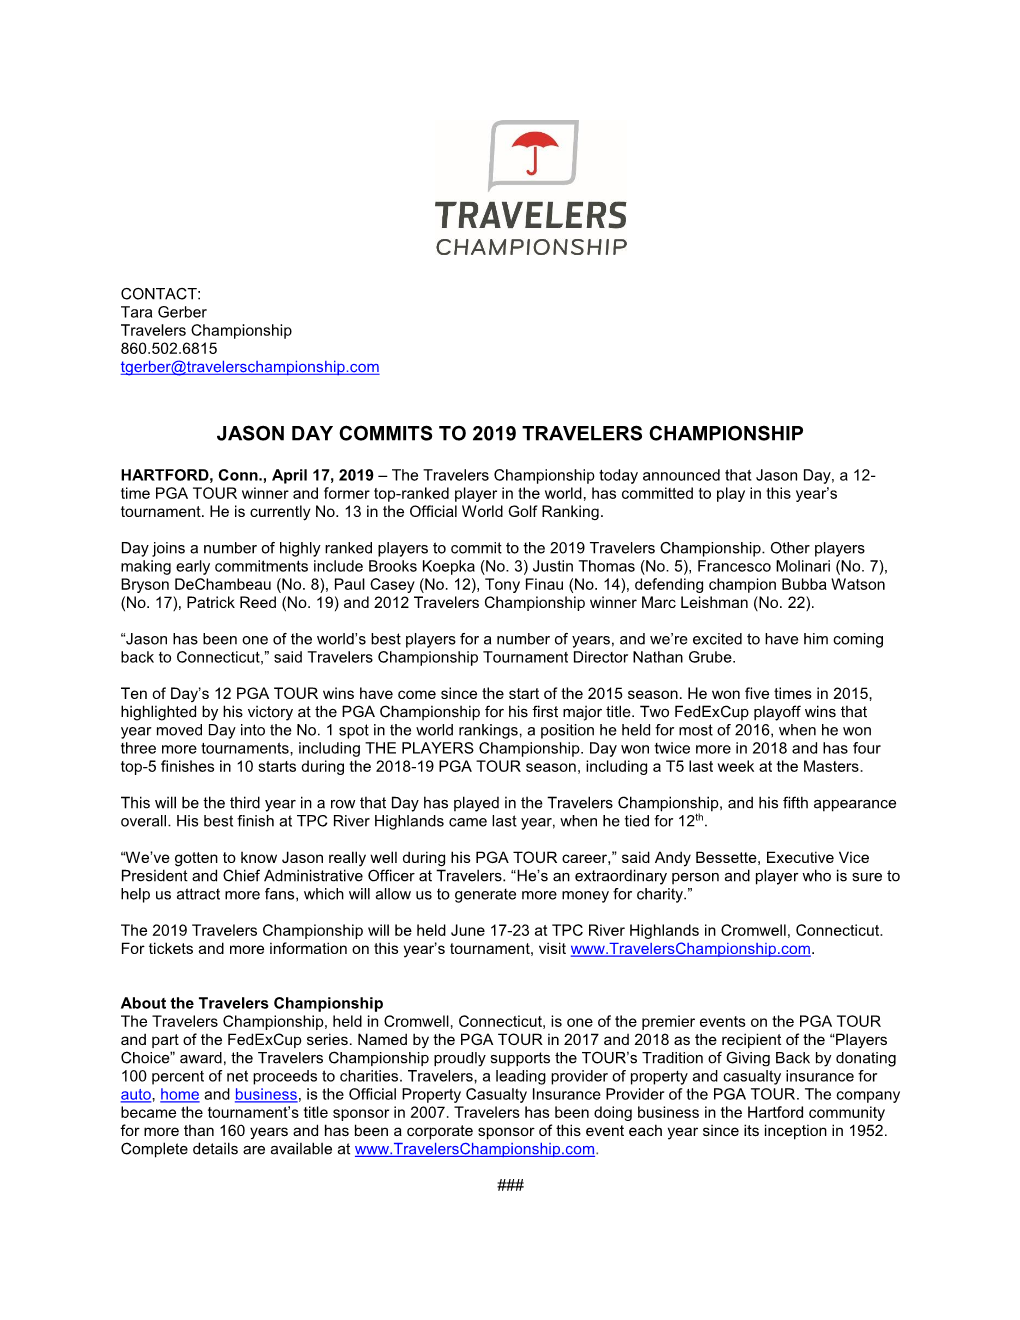 Jason Day Commits to 2019 Travelers Championship